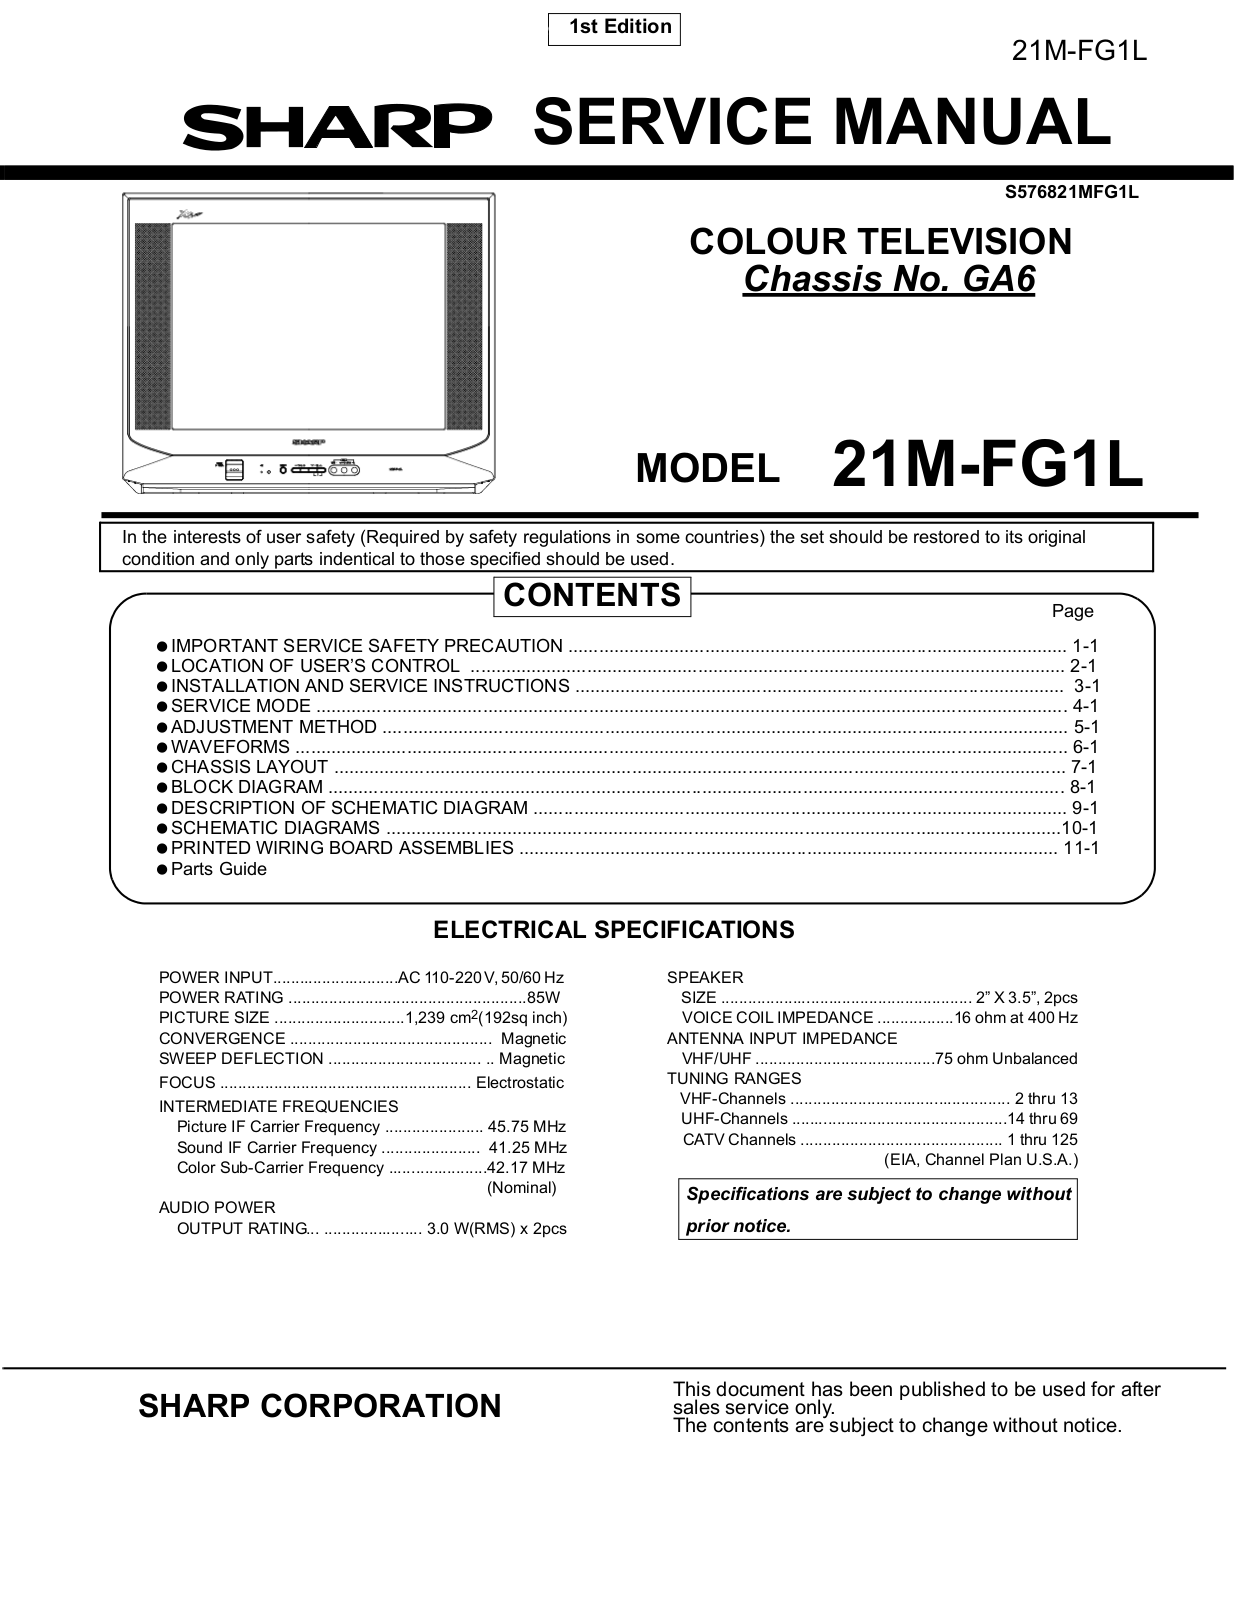 SHARP 21M-FG1L Service Manual